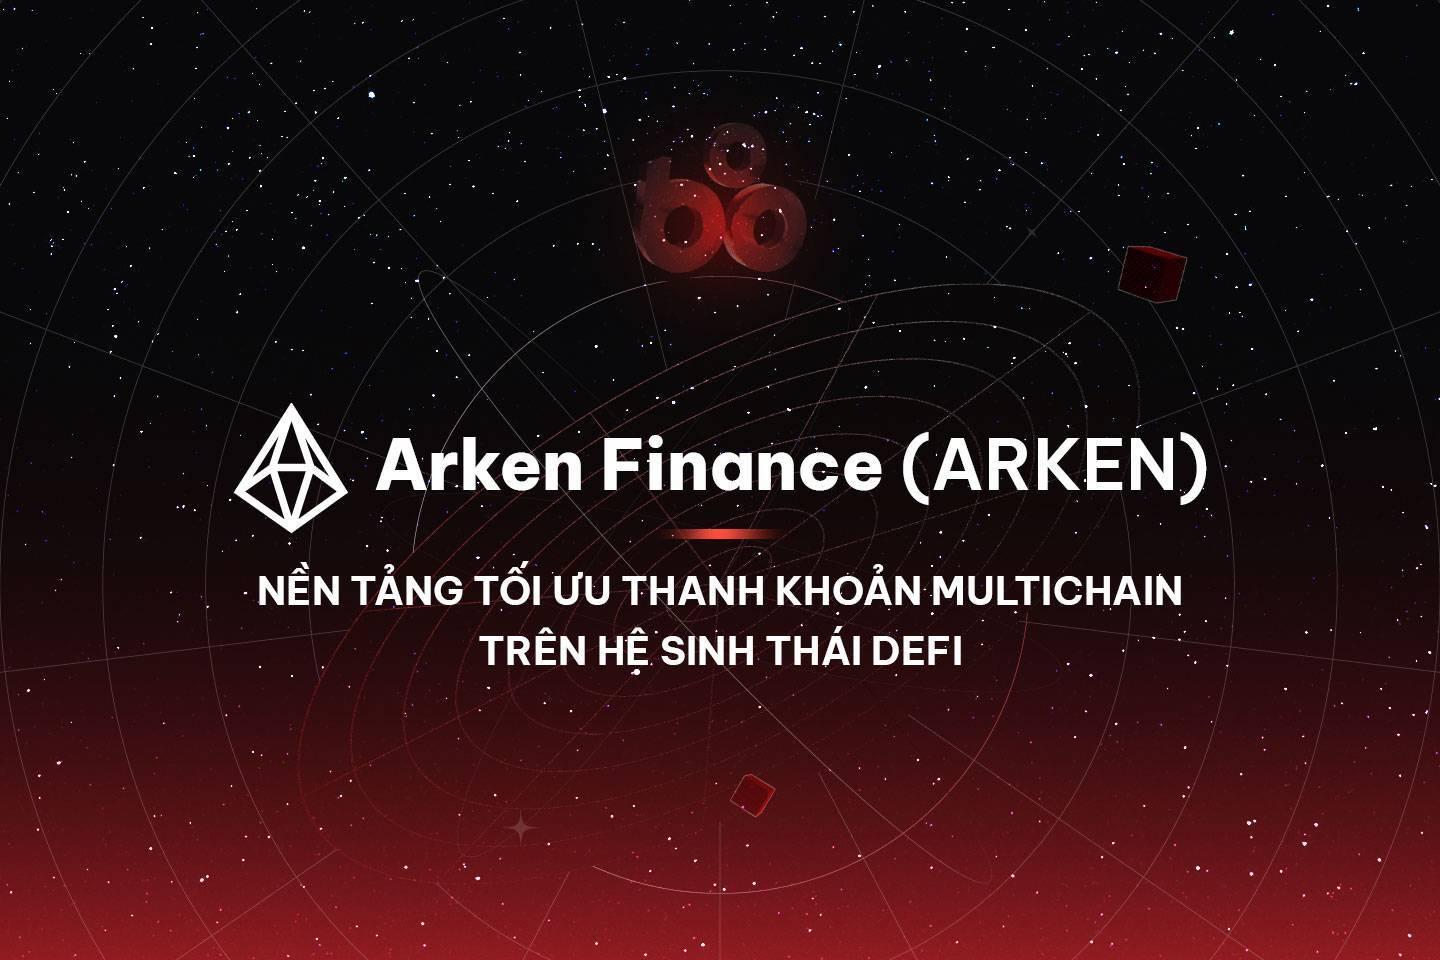 arken-finance-arken-nen-tang-toi-uu-thanh-khoan-multichain-tren-he-sinh-thai-defi